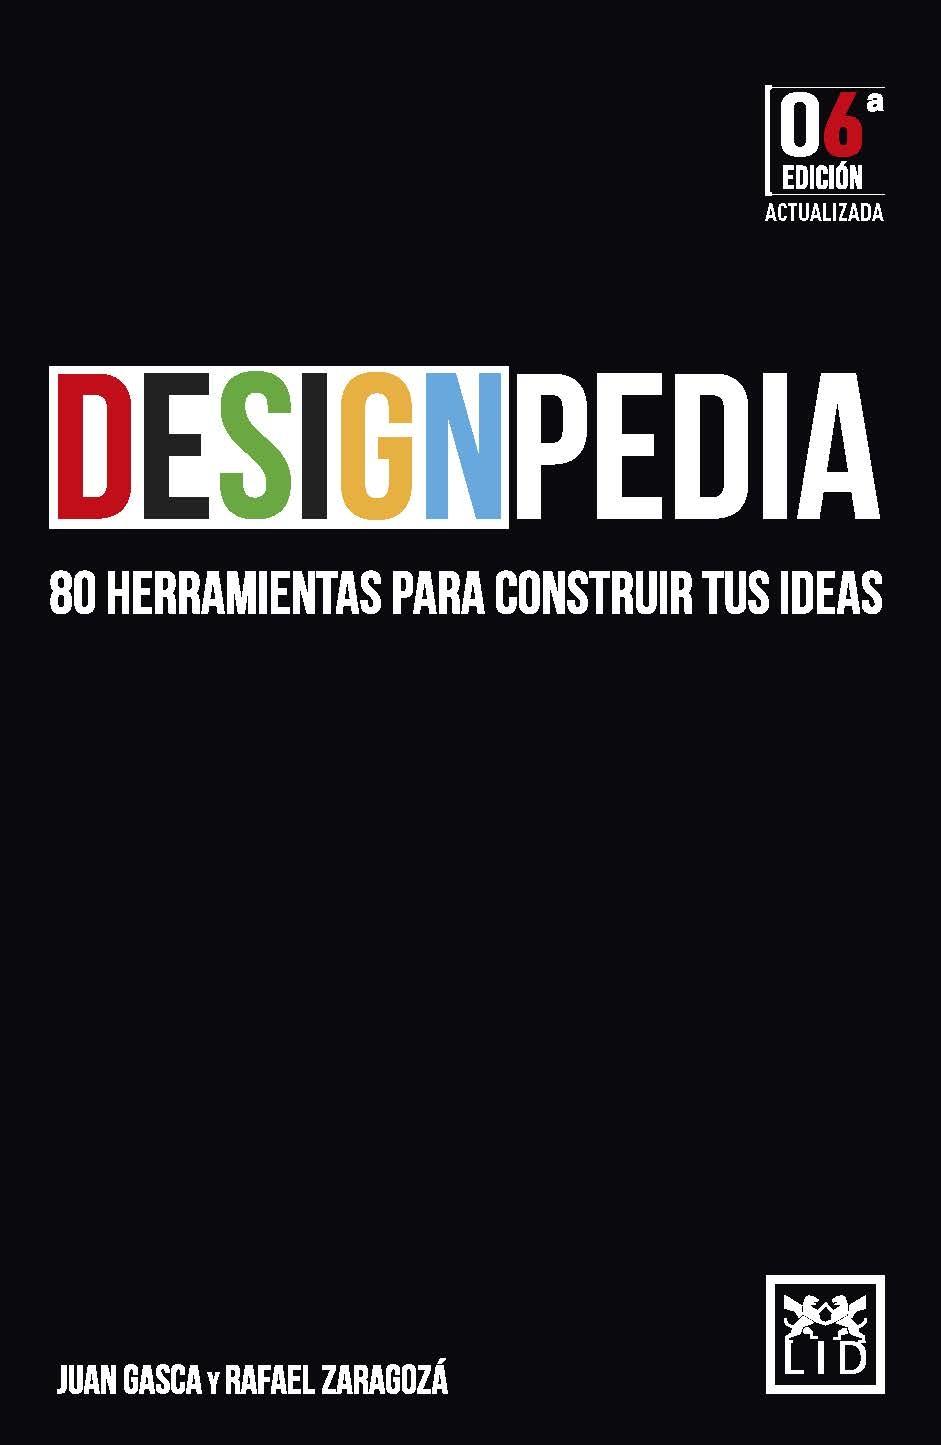 DESIGNPEDIA "80 HERRAMIENTAS PARA CONSTRUIR TUS IDEAS"